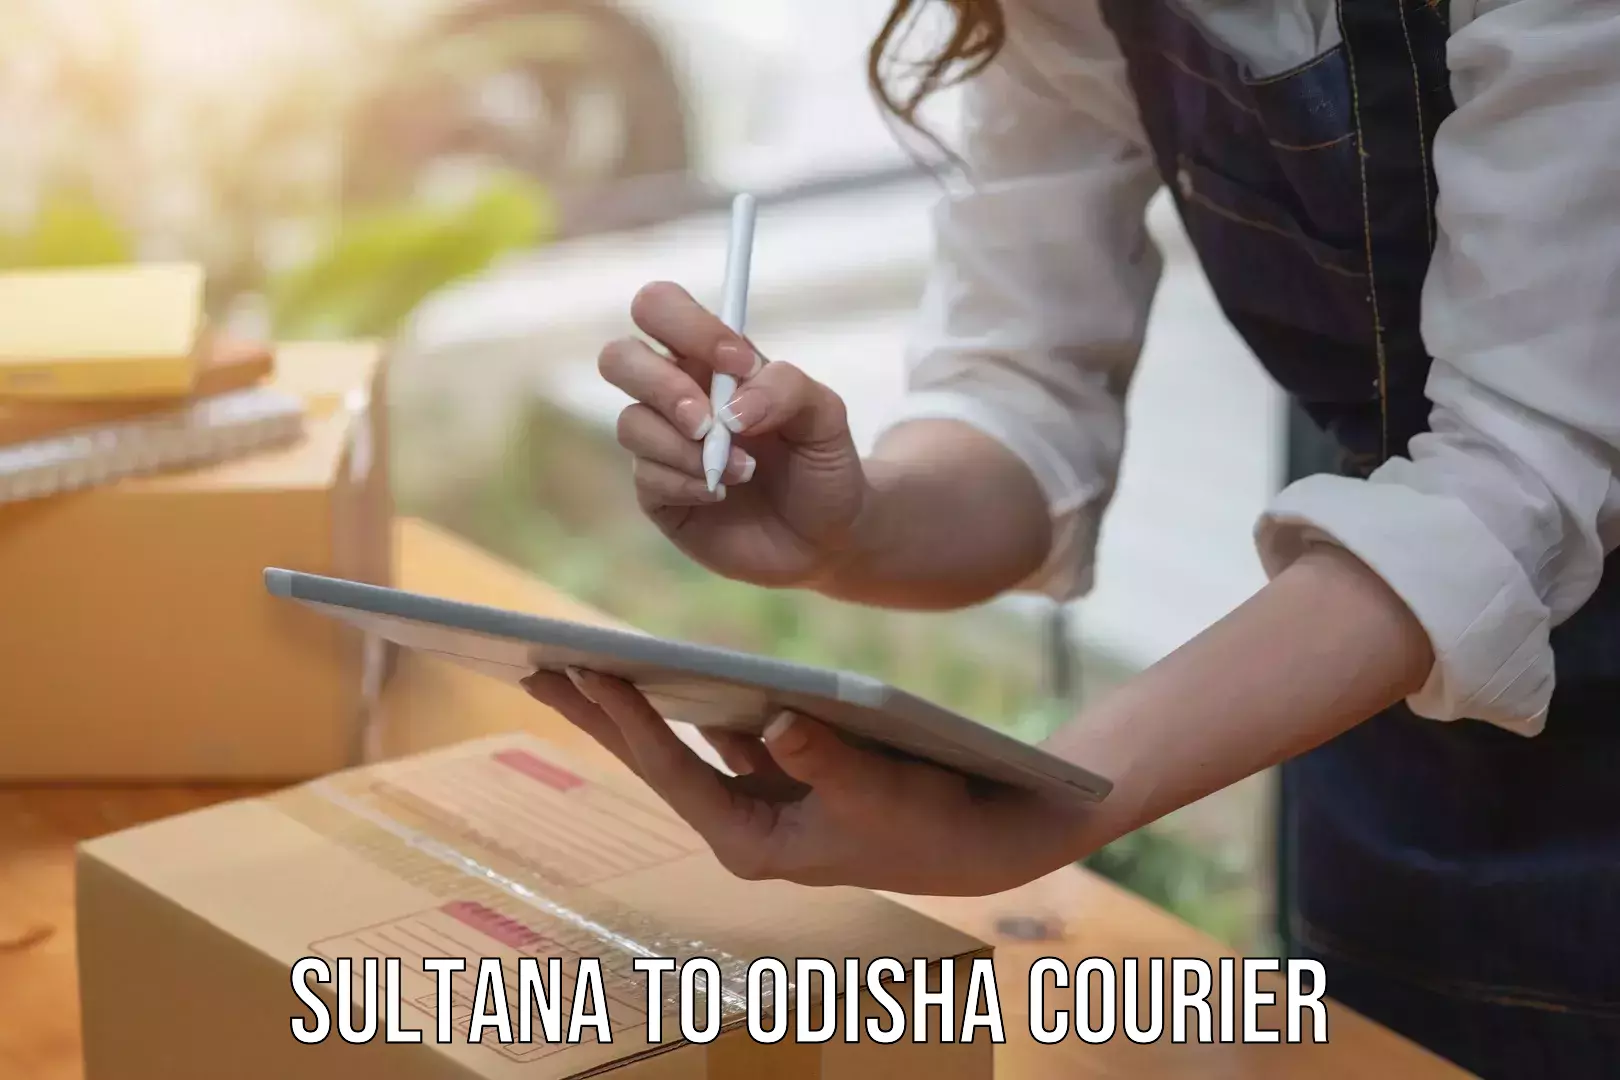 Courier service comparison Sultana to Kalimela